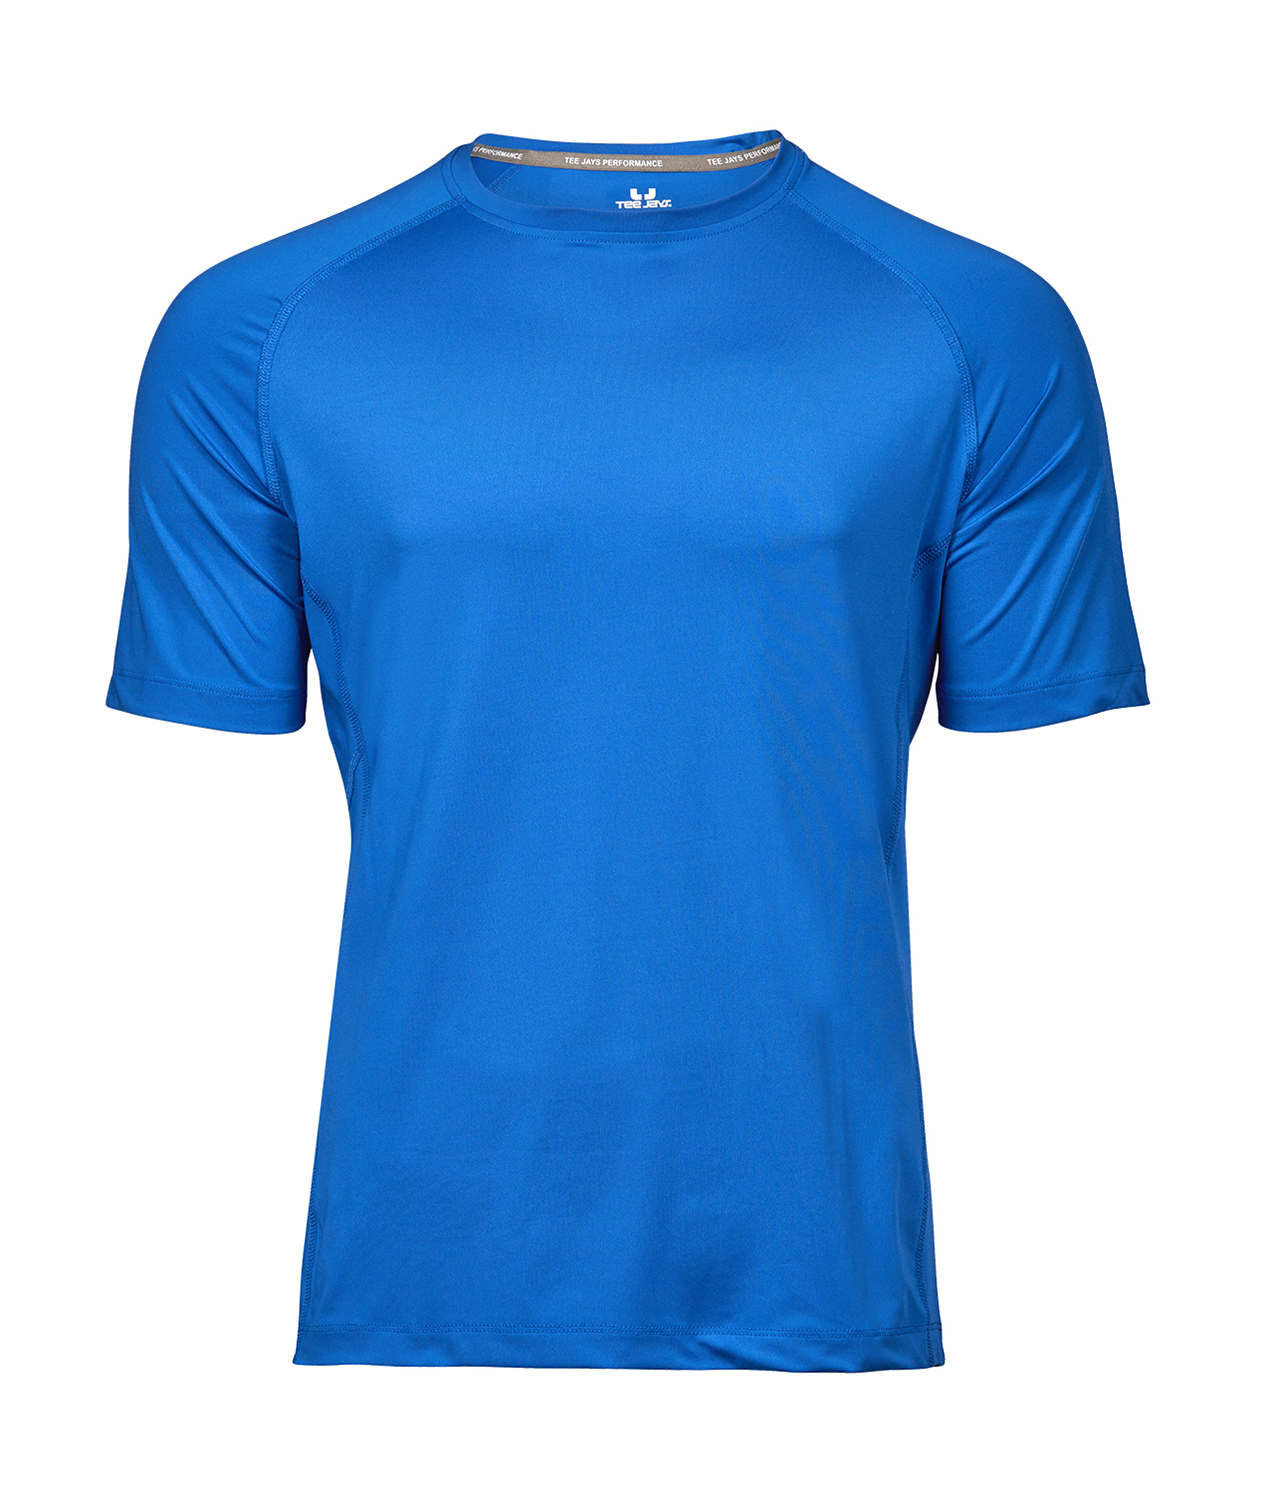 Pánské triko Cool dry Velikost: 3XL, Barva: Modrá